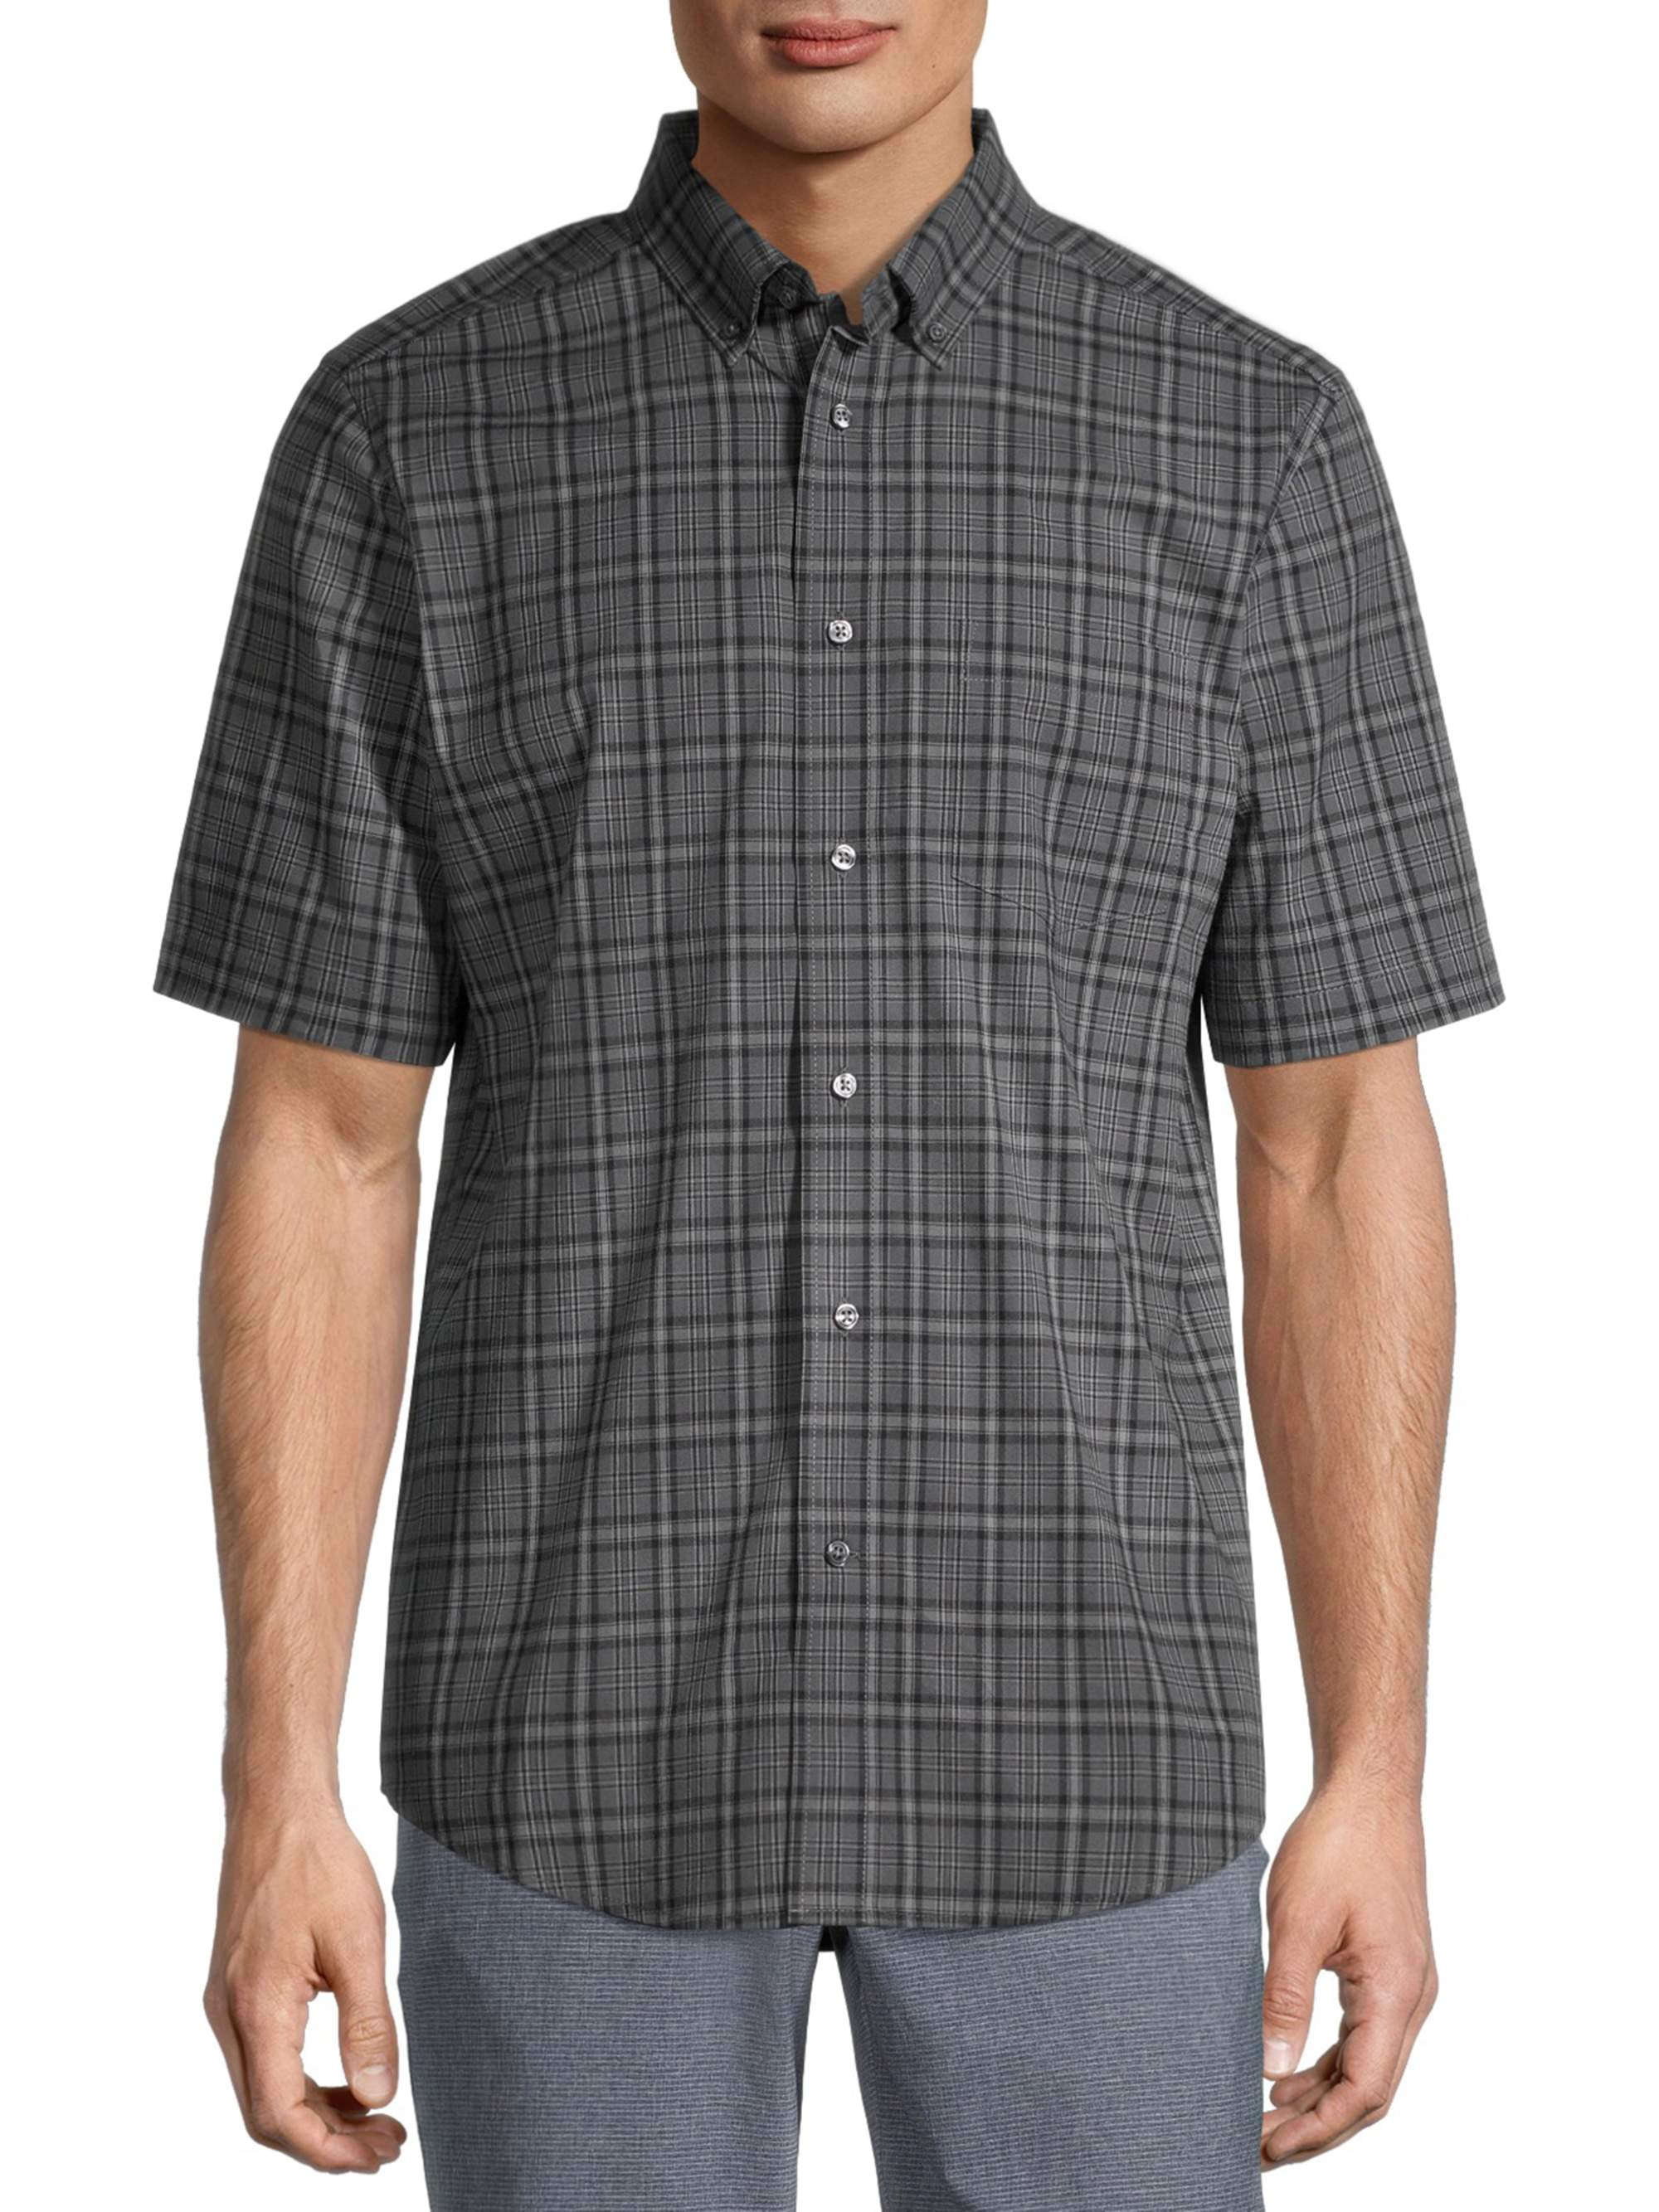 NEW Men Button Up Shirt BIG & TALL L-8XL Striped Plaid Short Sleeve 12 Colors 